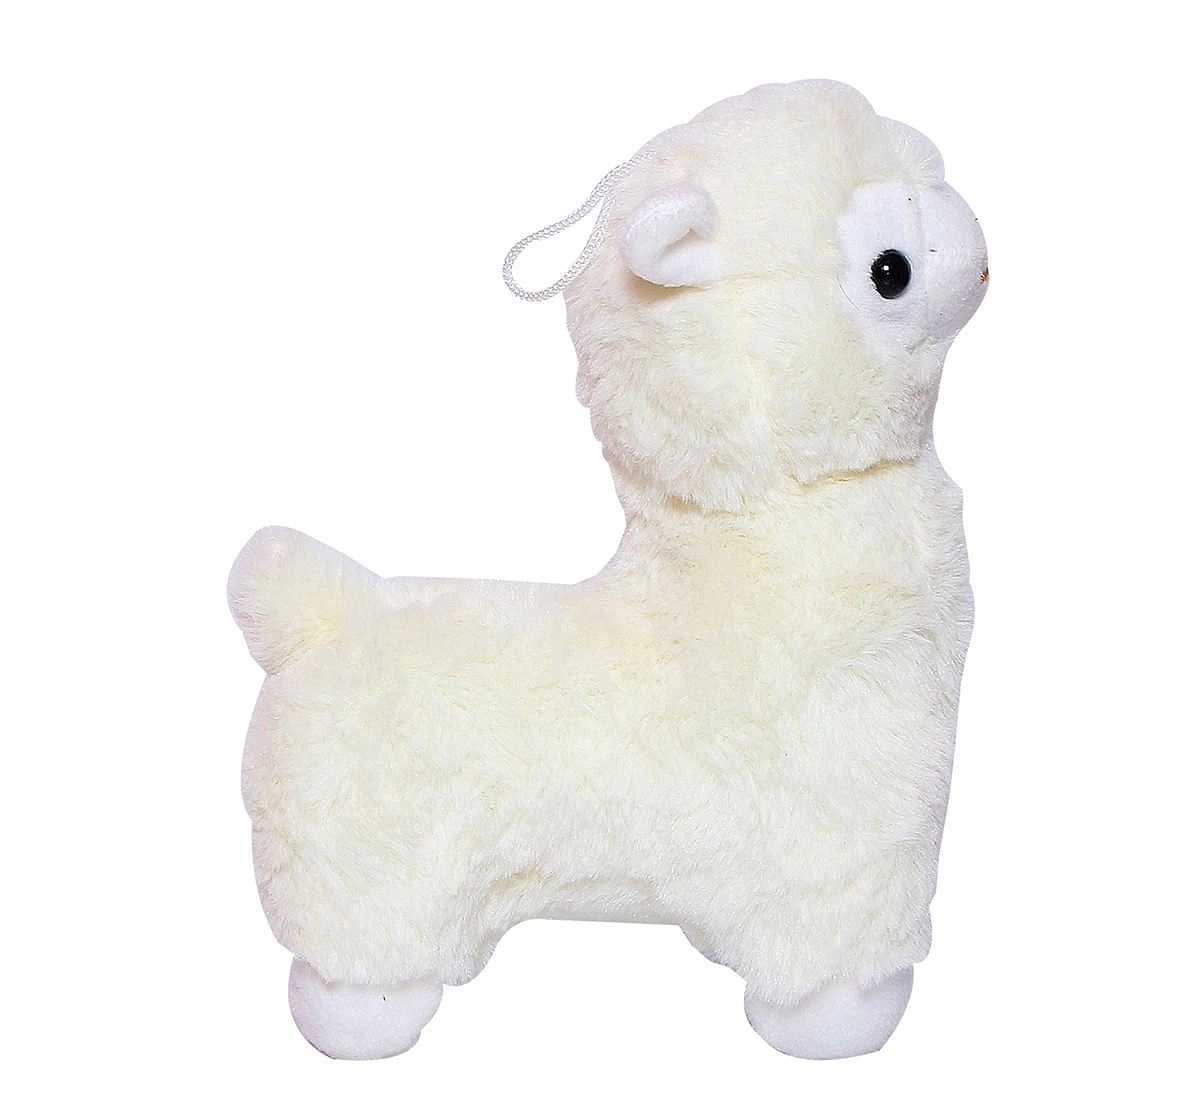 Pikmi Pops Llama Assorted Quirky Soft Toys for Girls age 5Y+ - 21 Cm 